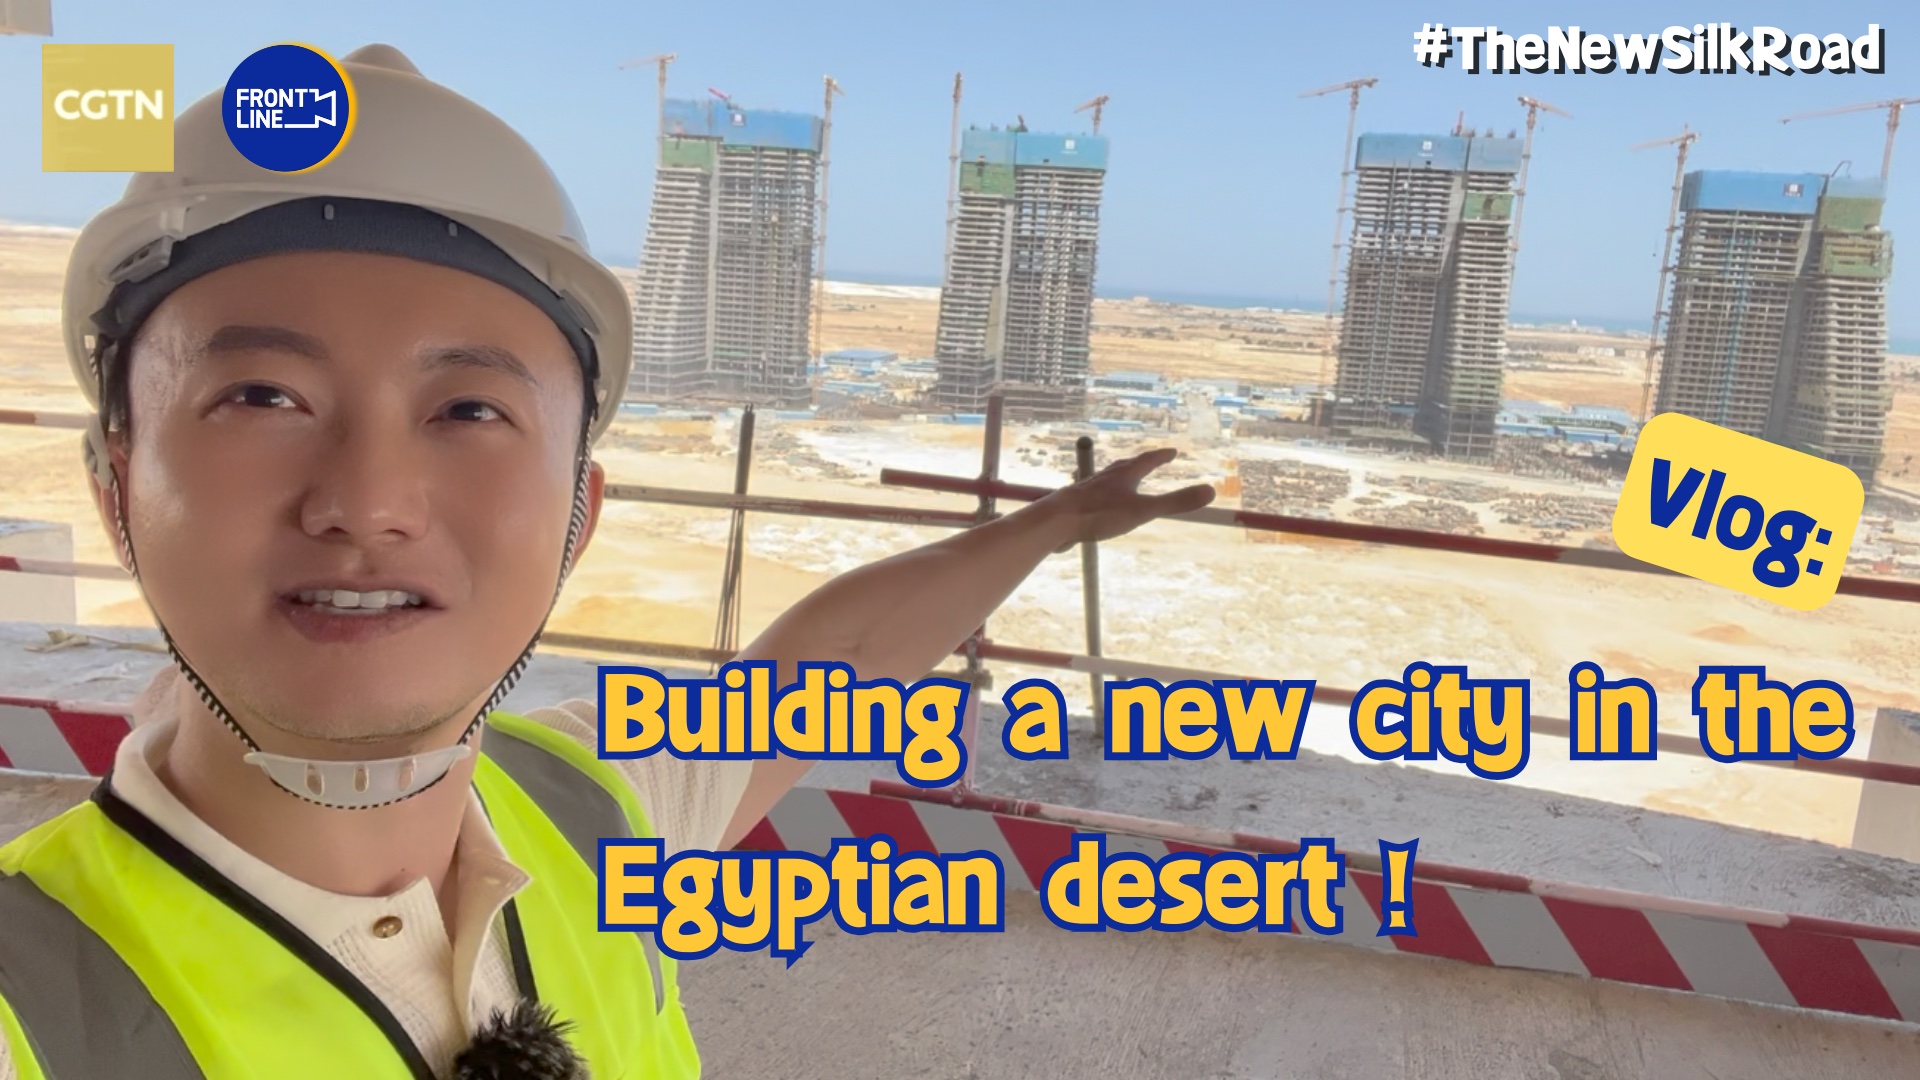 Vlog: Building a new city in the Egyptian desert